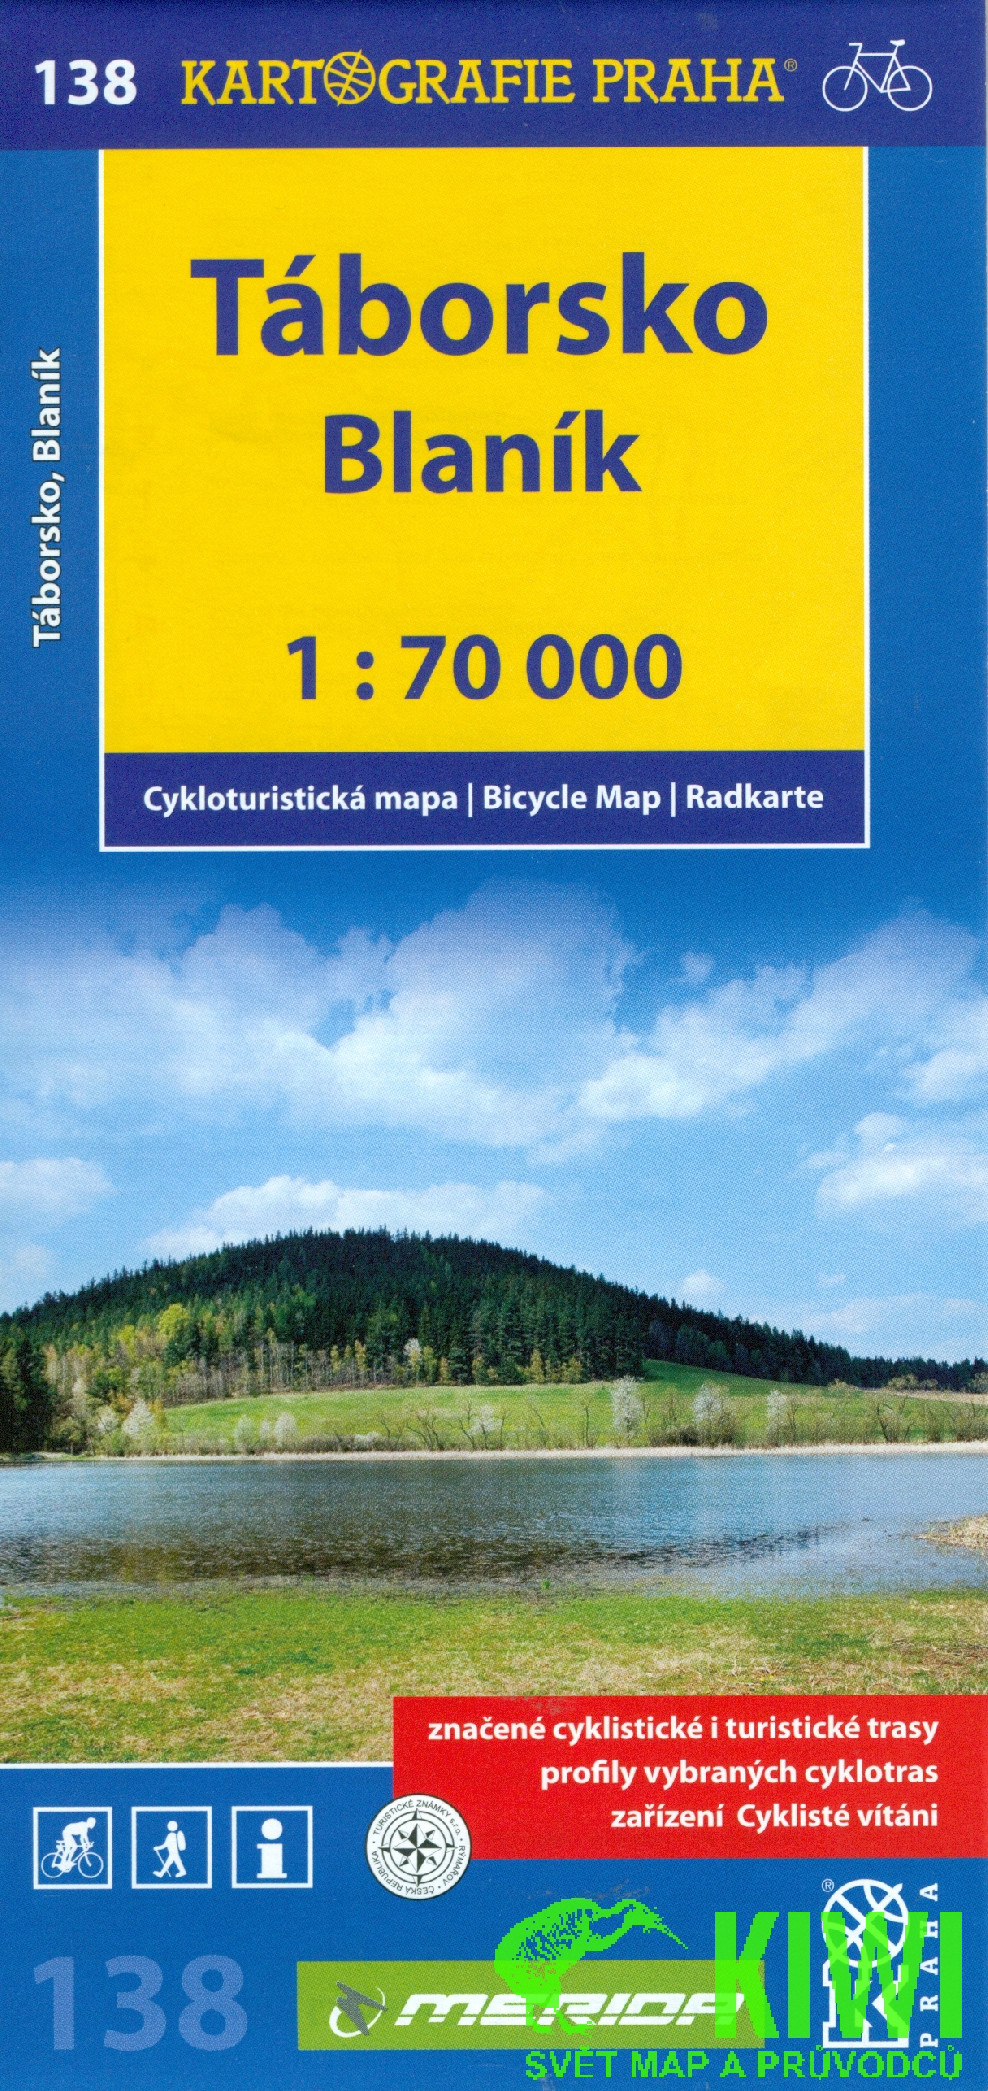 Kartografie Praha cyklomapa Táborsko, Blaník 1:70 t., 2. vydání 2011